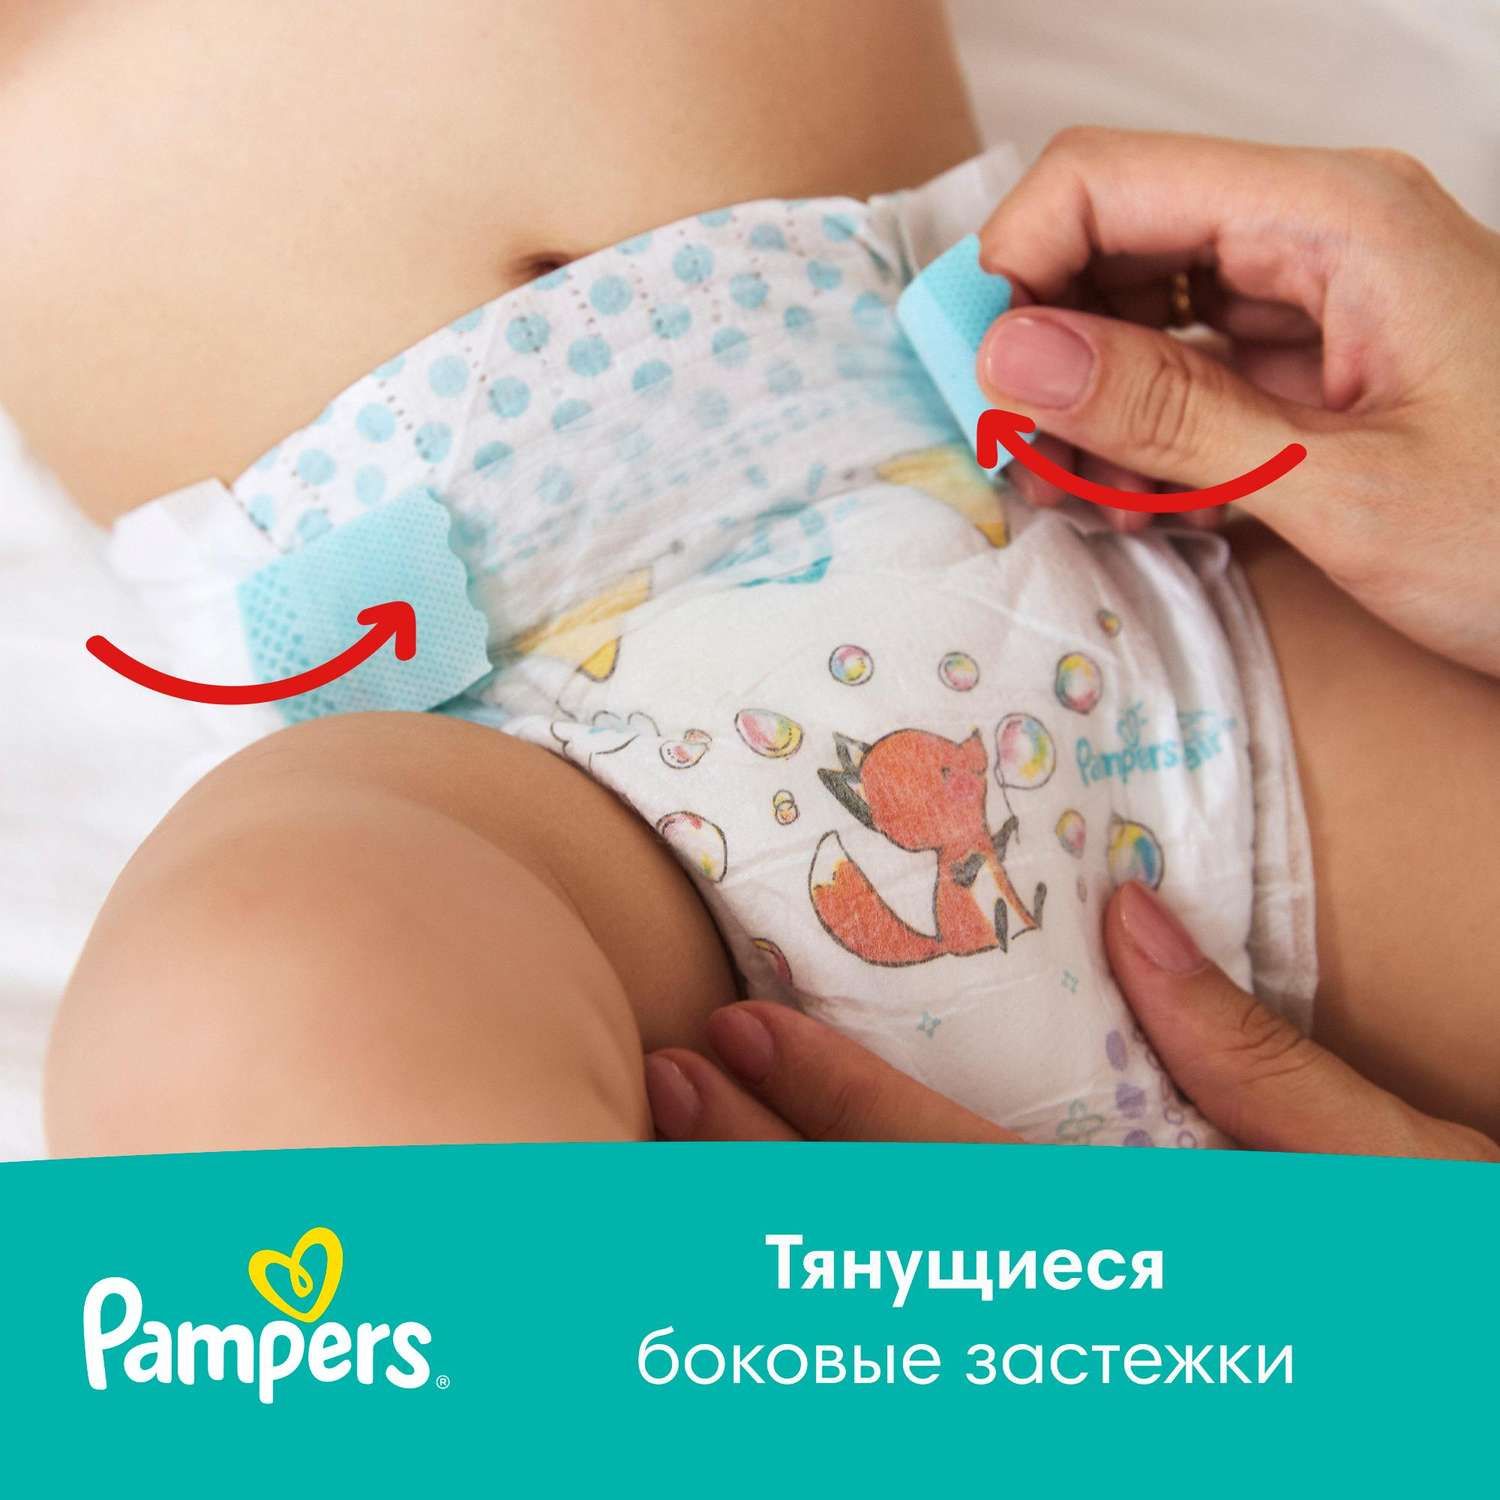 Подгузники Pampers New Baby-Dry 2 4-8кг 94шт - фото 2